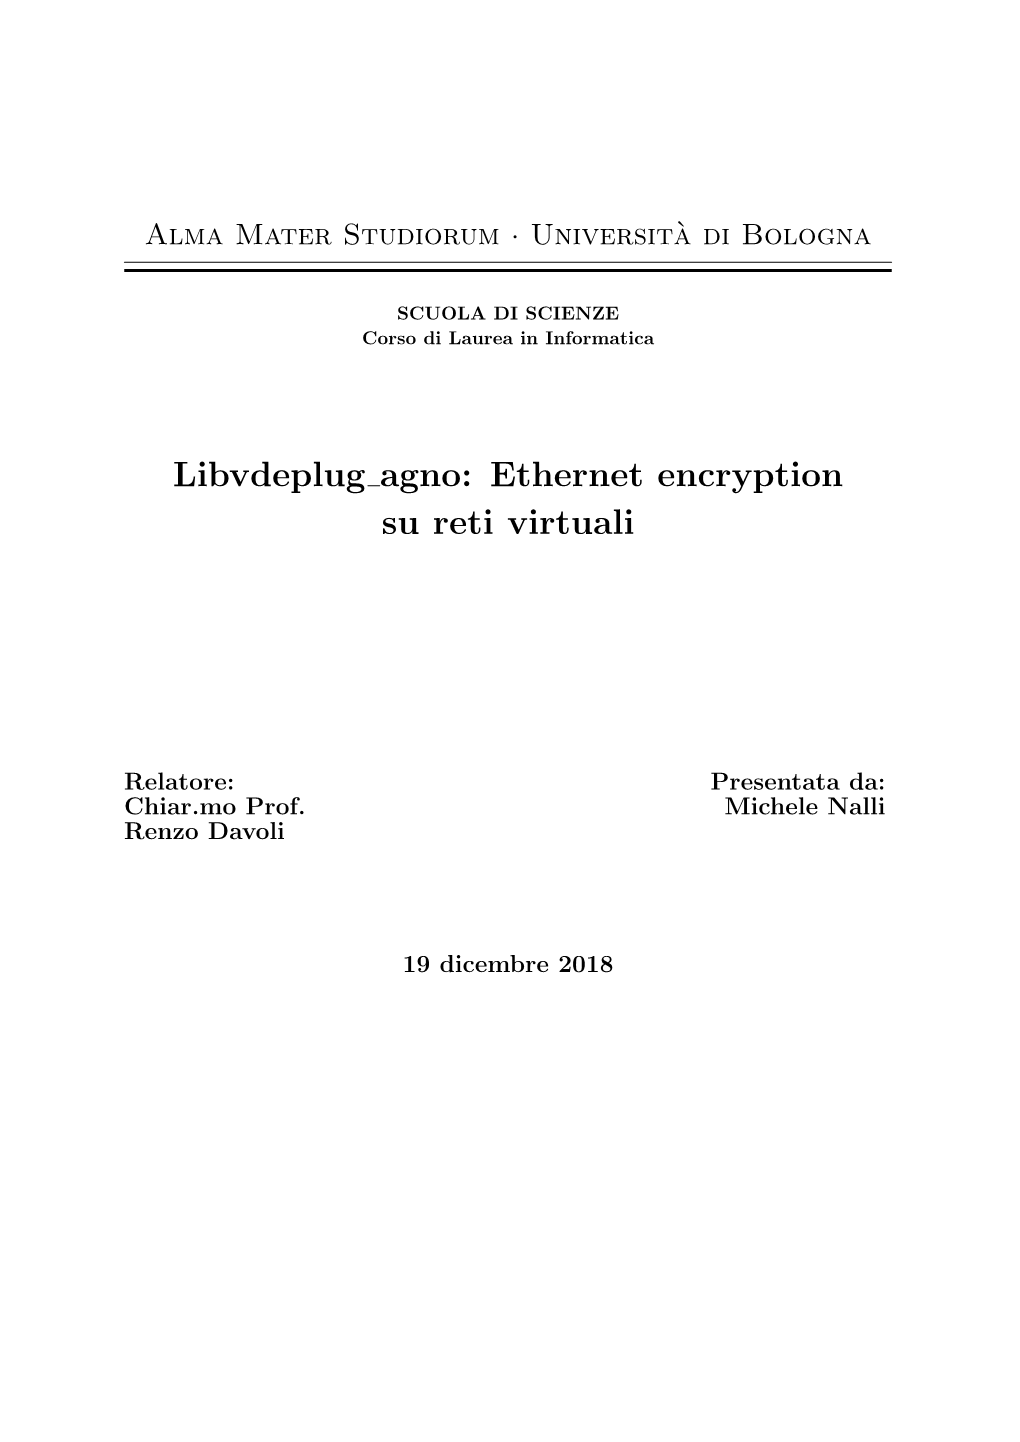 Libvdeplug Agno: Ethernet Encryption Su Reti Virtuali